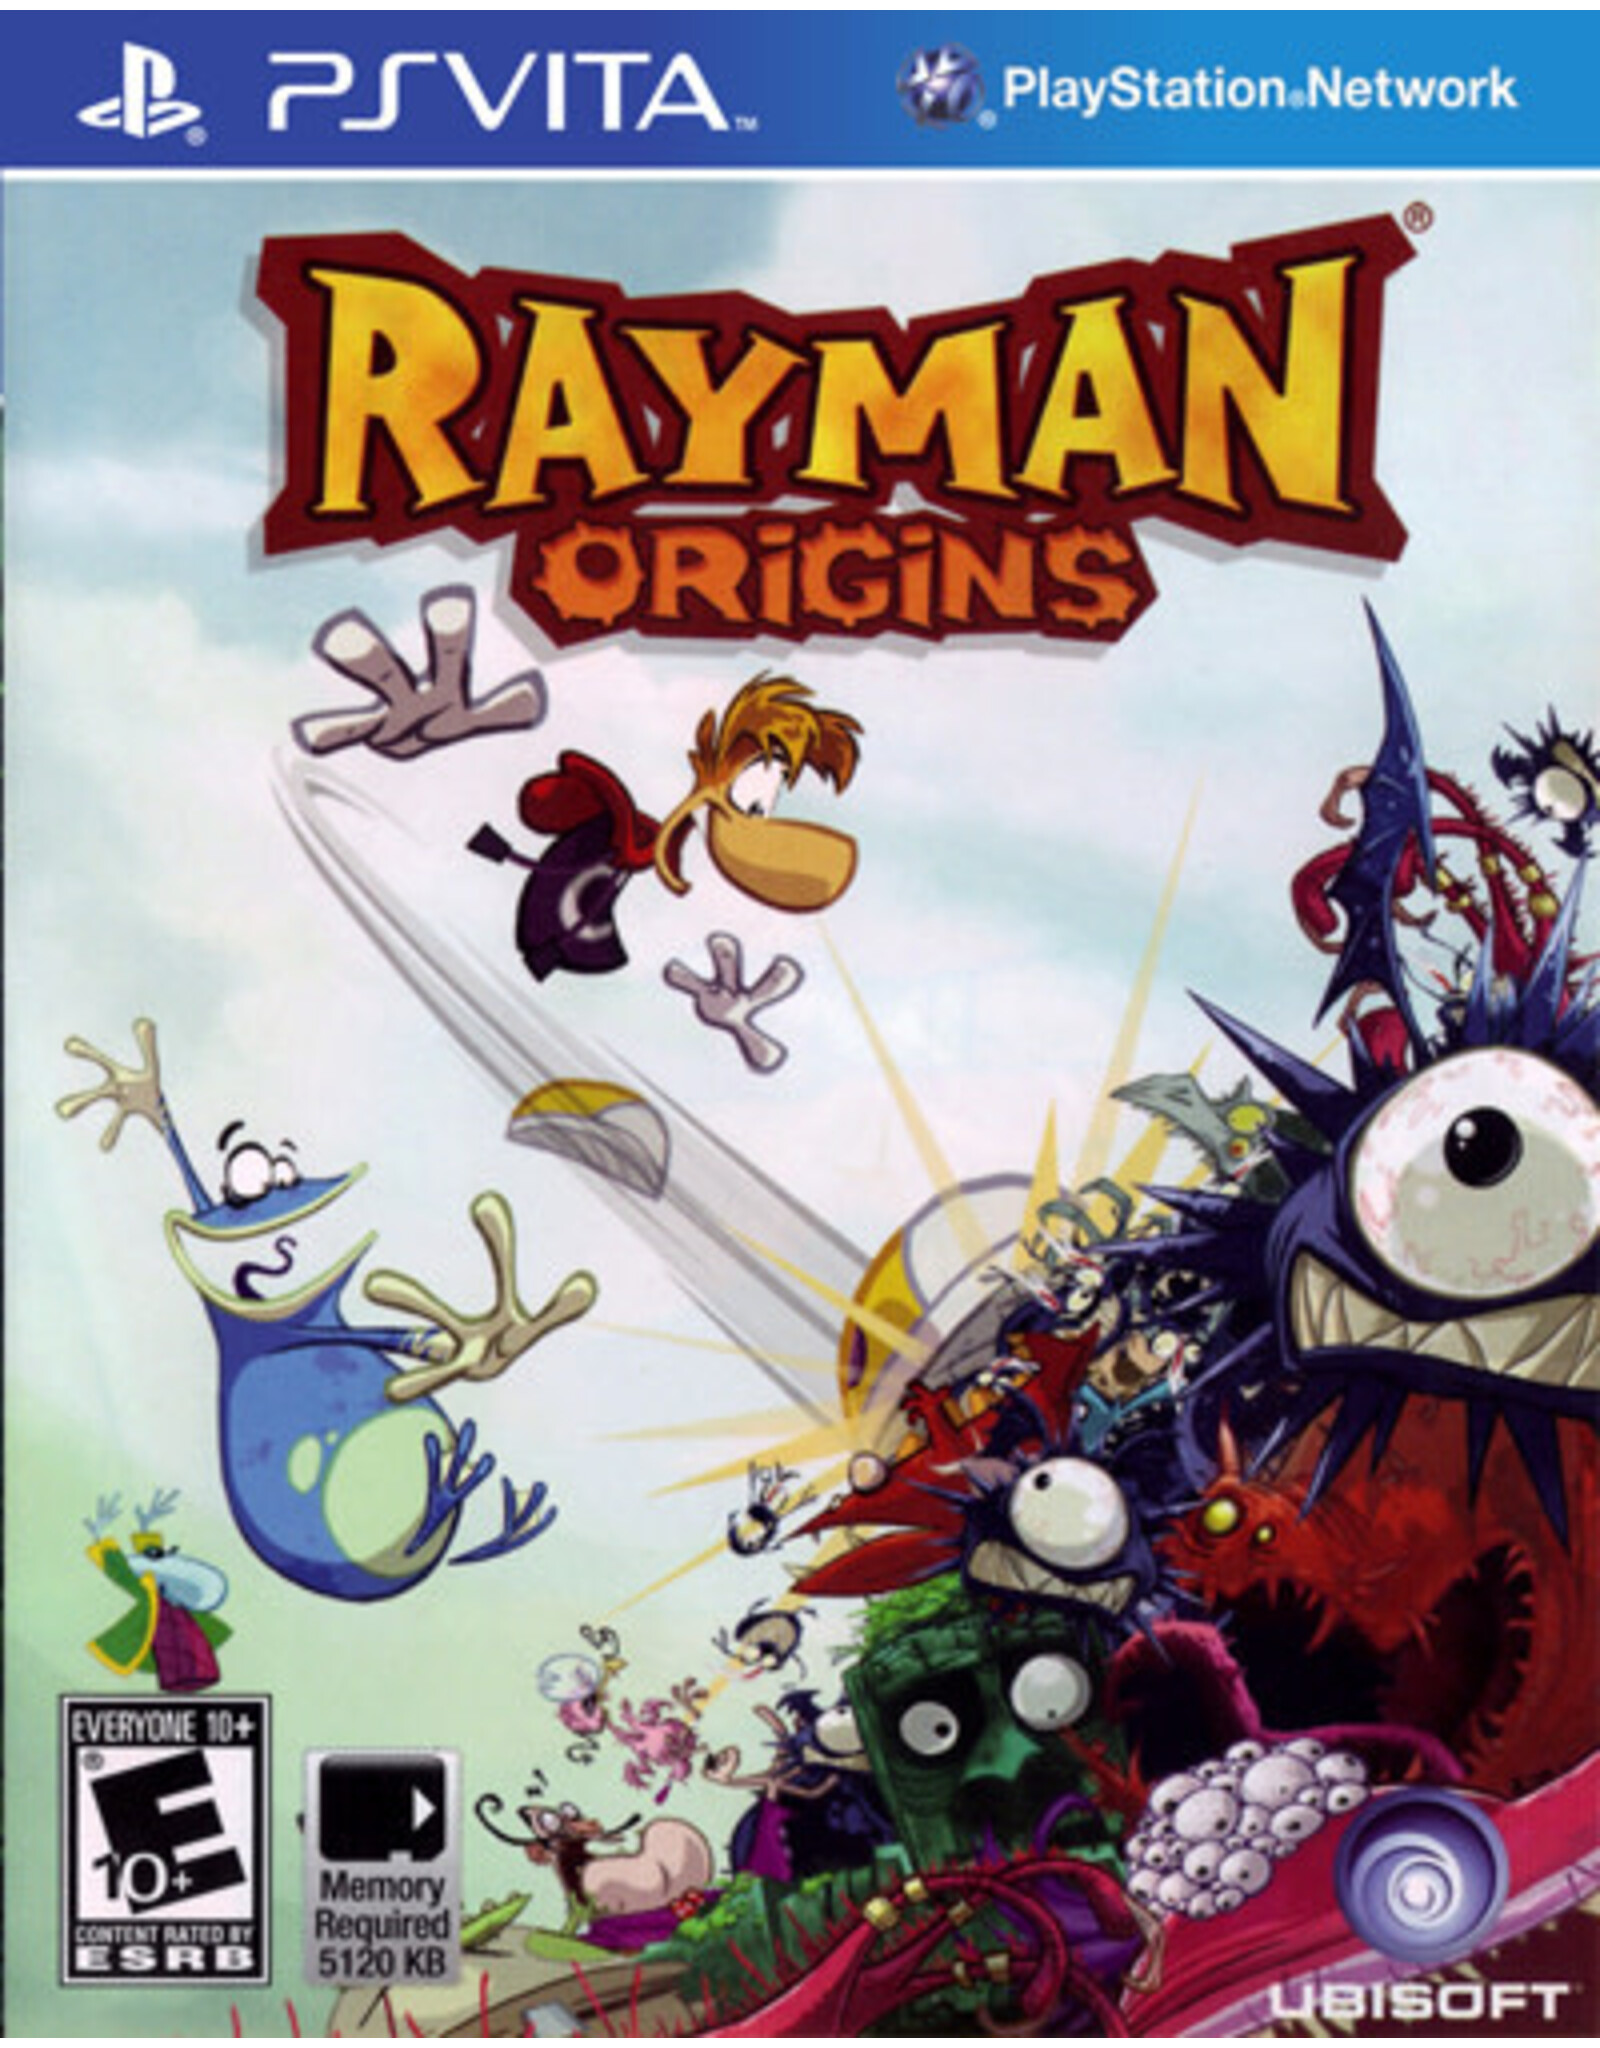 Playstation Vita Rayman Origins (CiB)